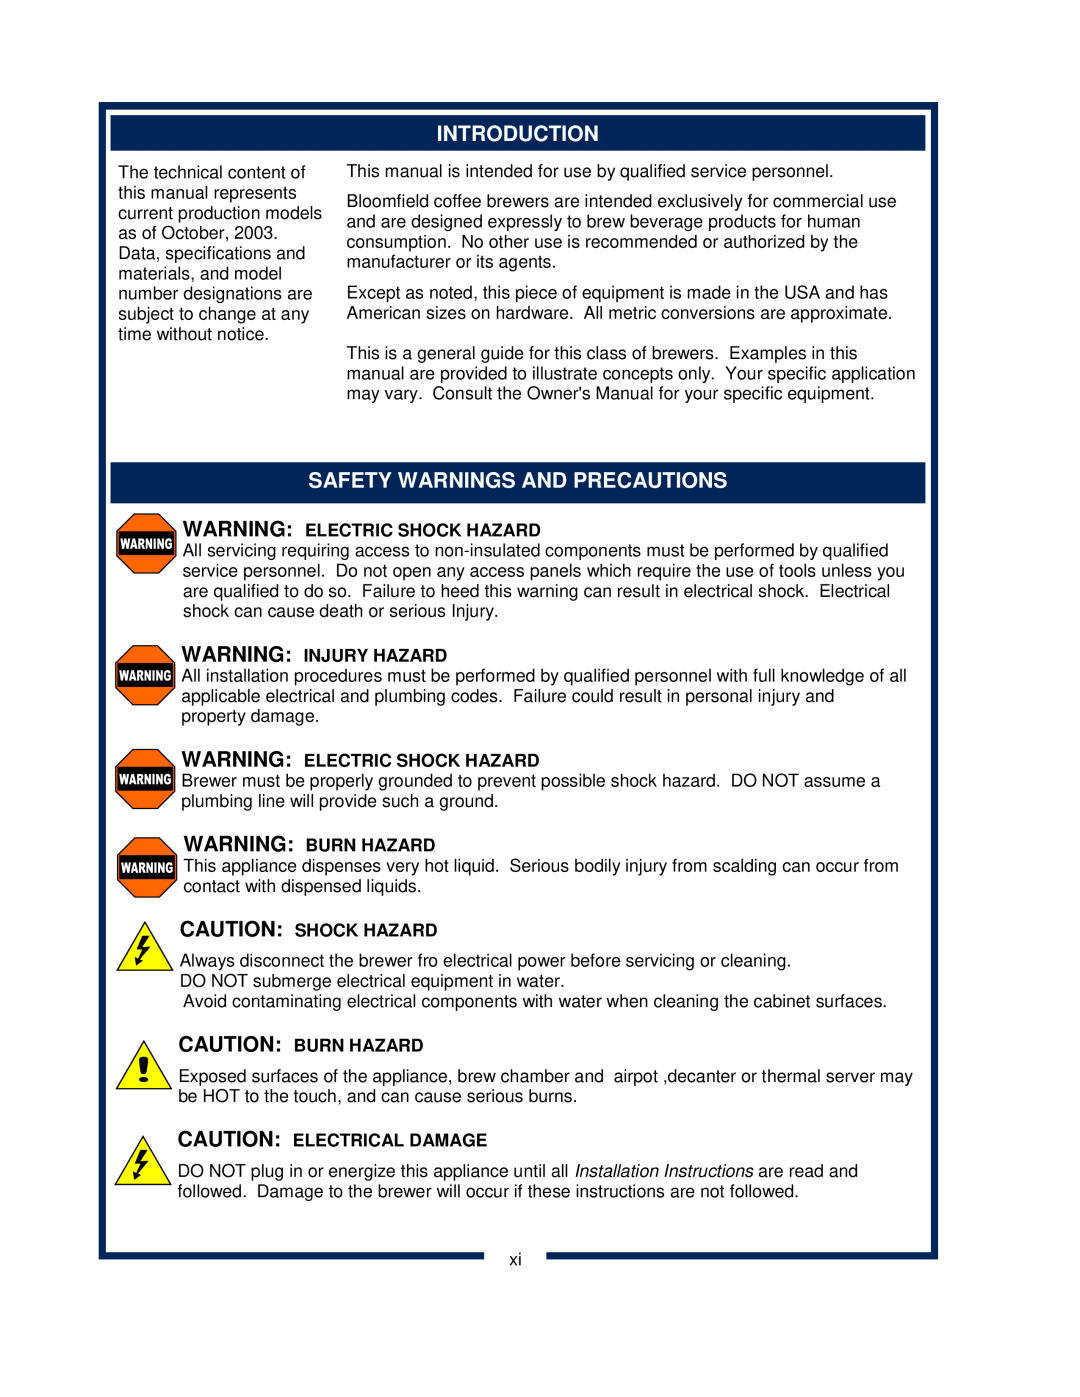 Bloomfield 600 manual Introduction, Safety Warnings And Precautions, Warning Electric Shock Hazard, Warning Injury Hazard 